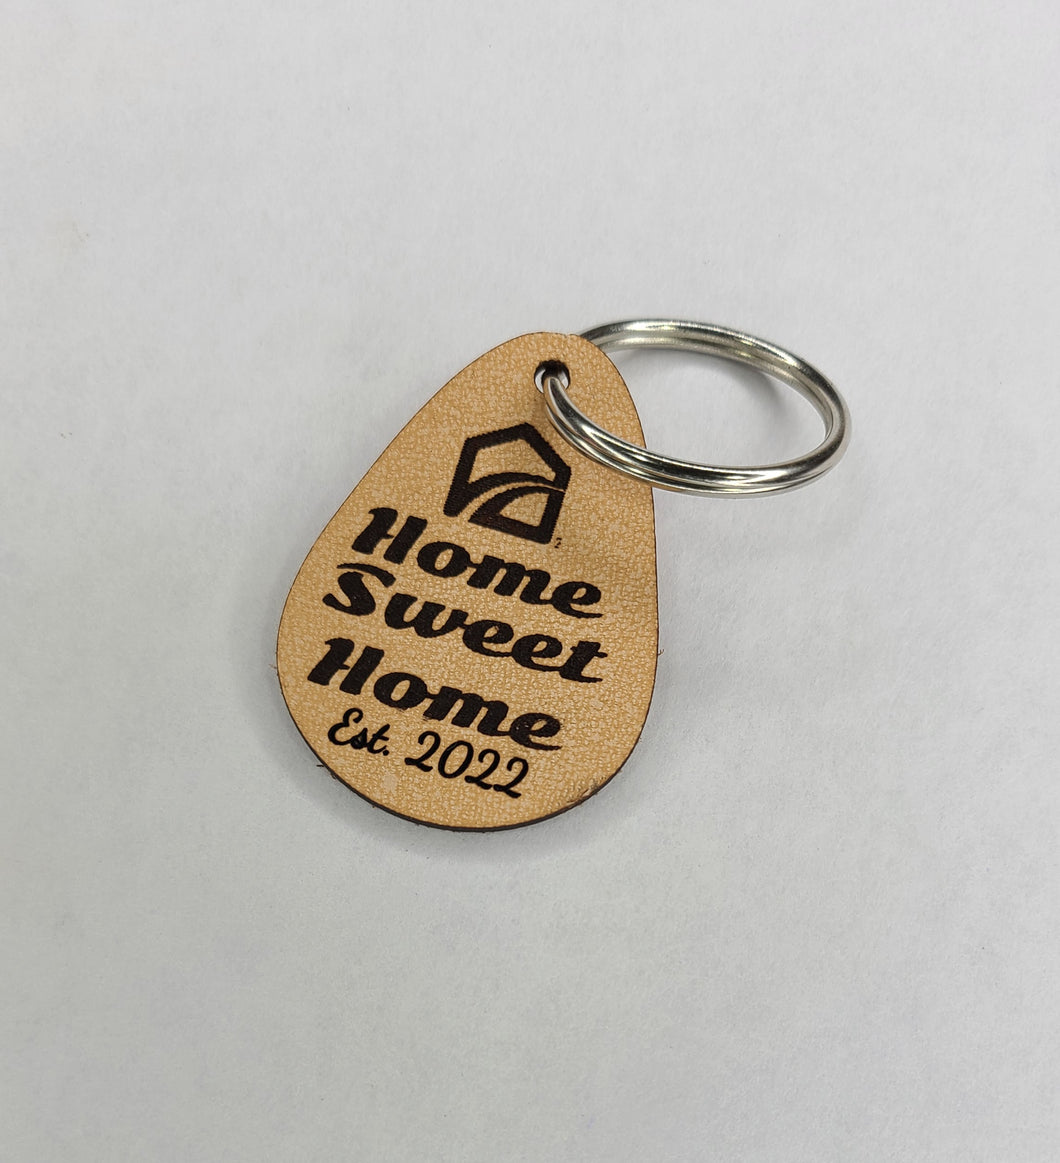 Home Sweet Home - Fairway branded key tag